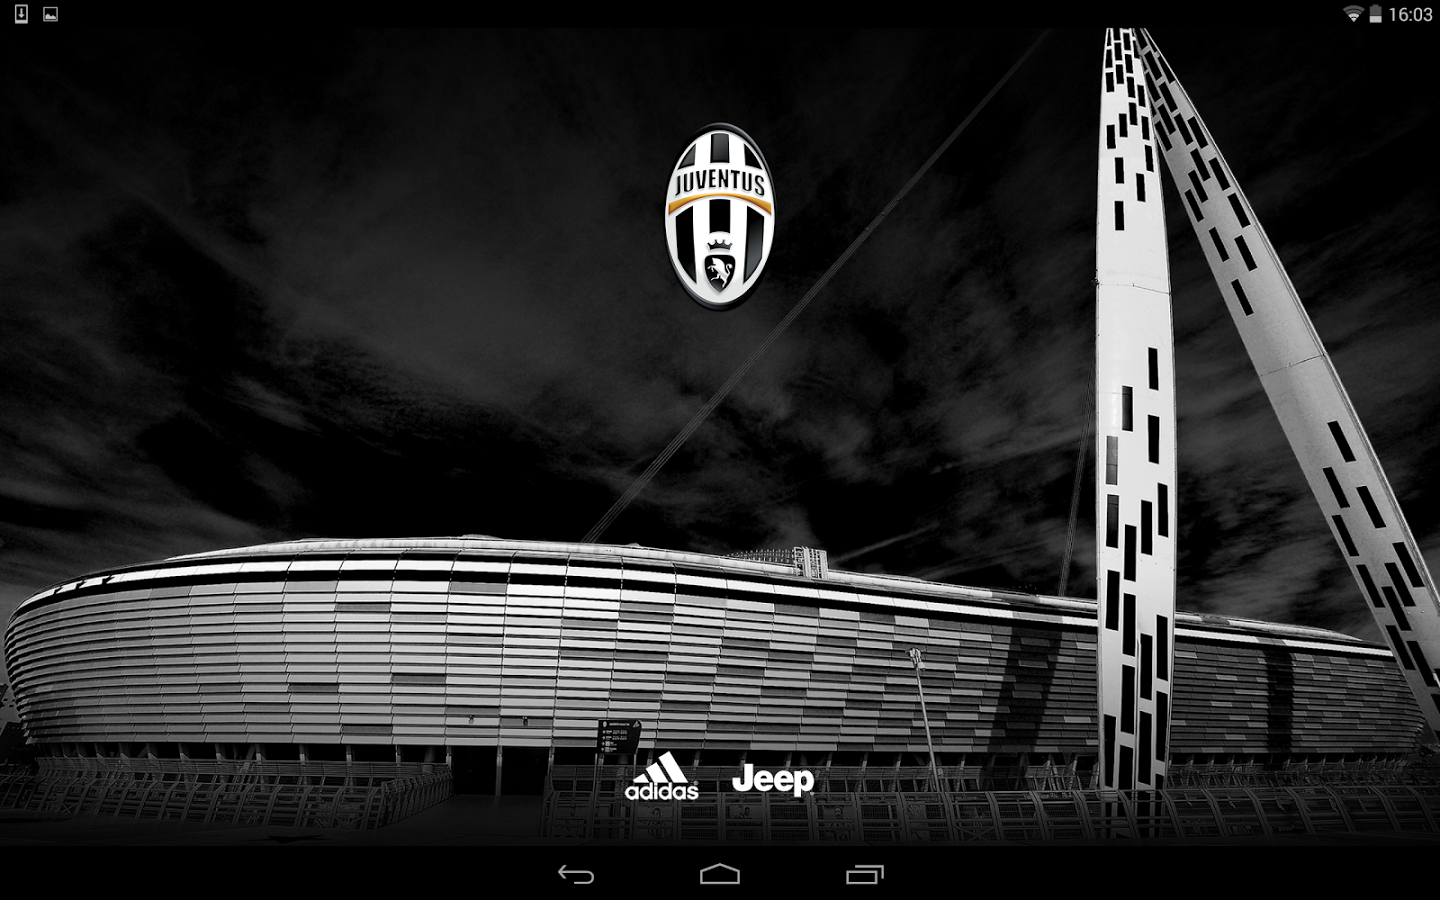 Juventus, Wallpaper, Smartphone - Juventus Wallpaper Hd 2019 - HD Wallpaper 